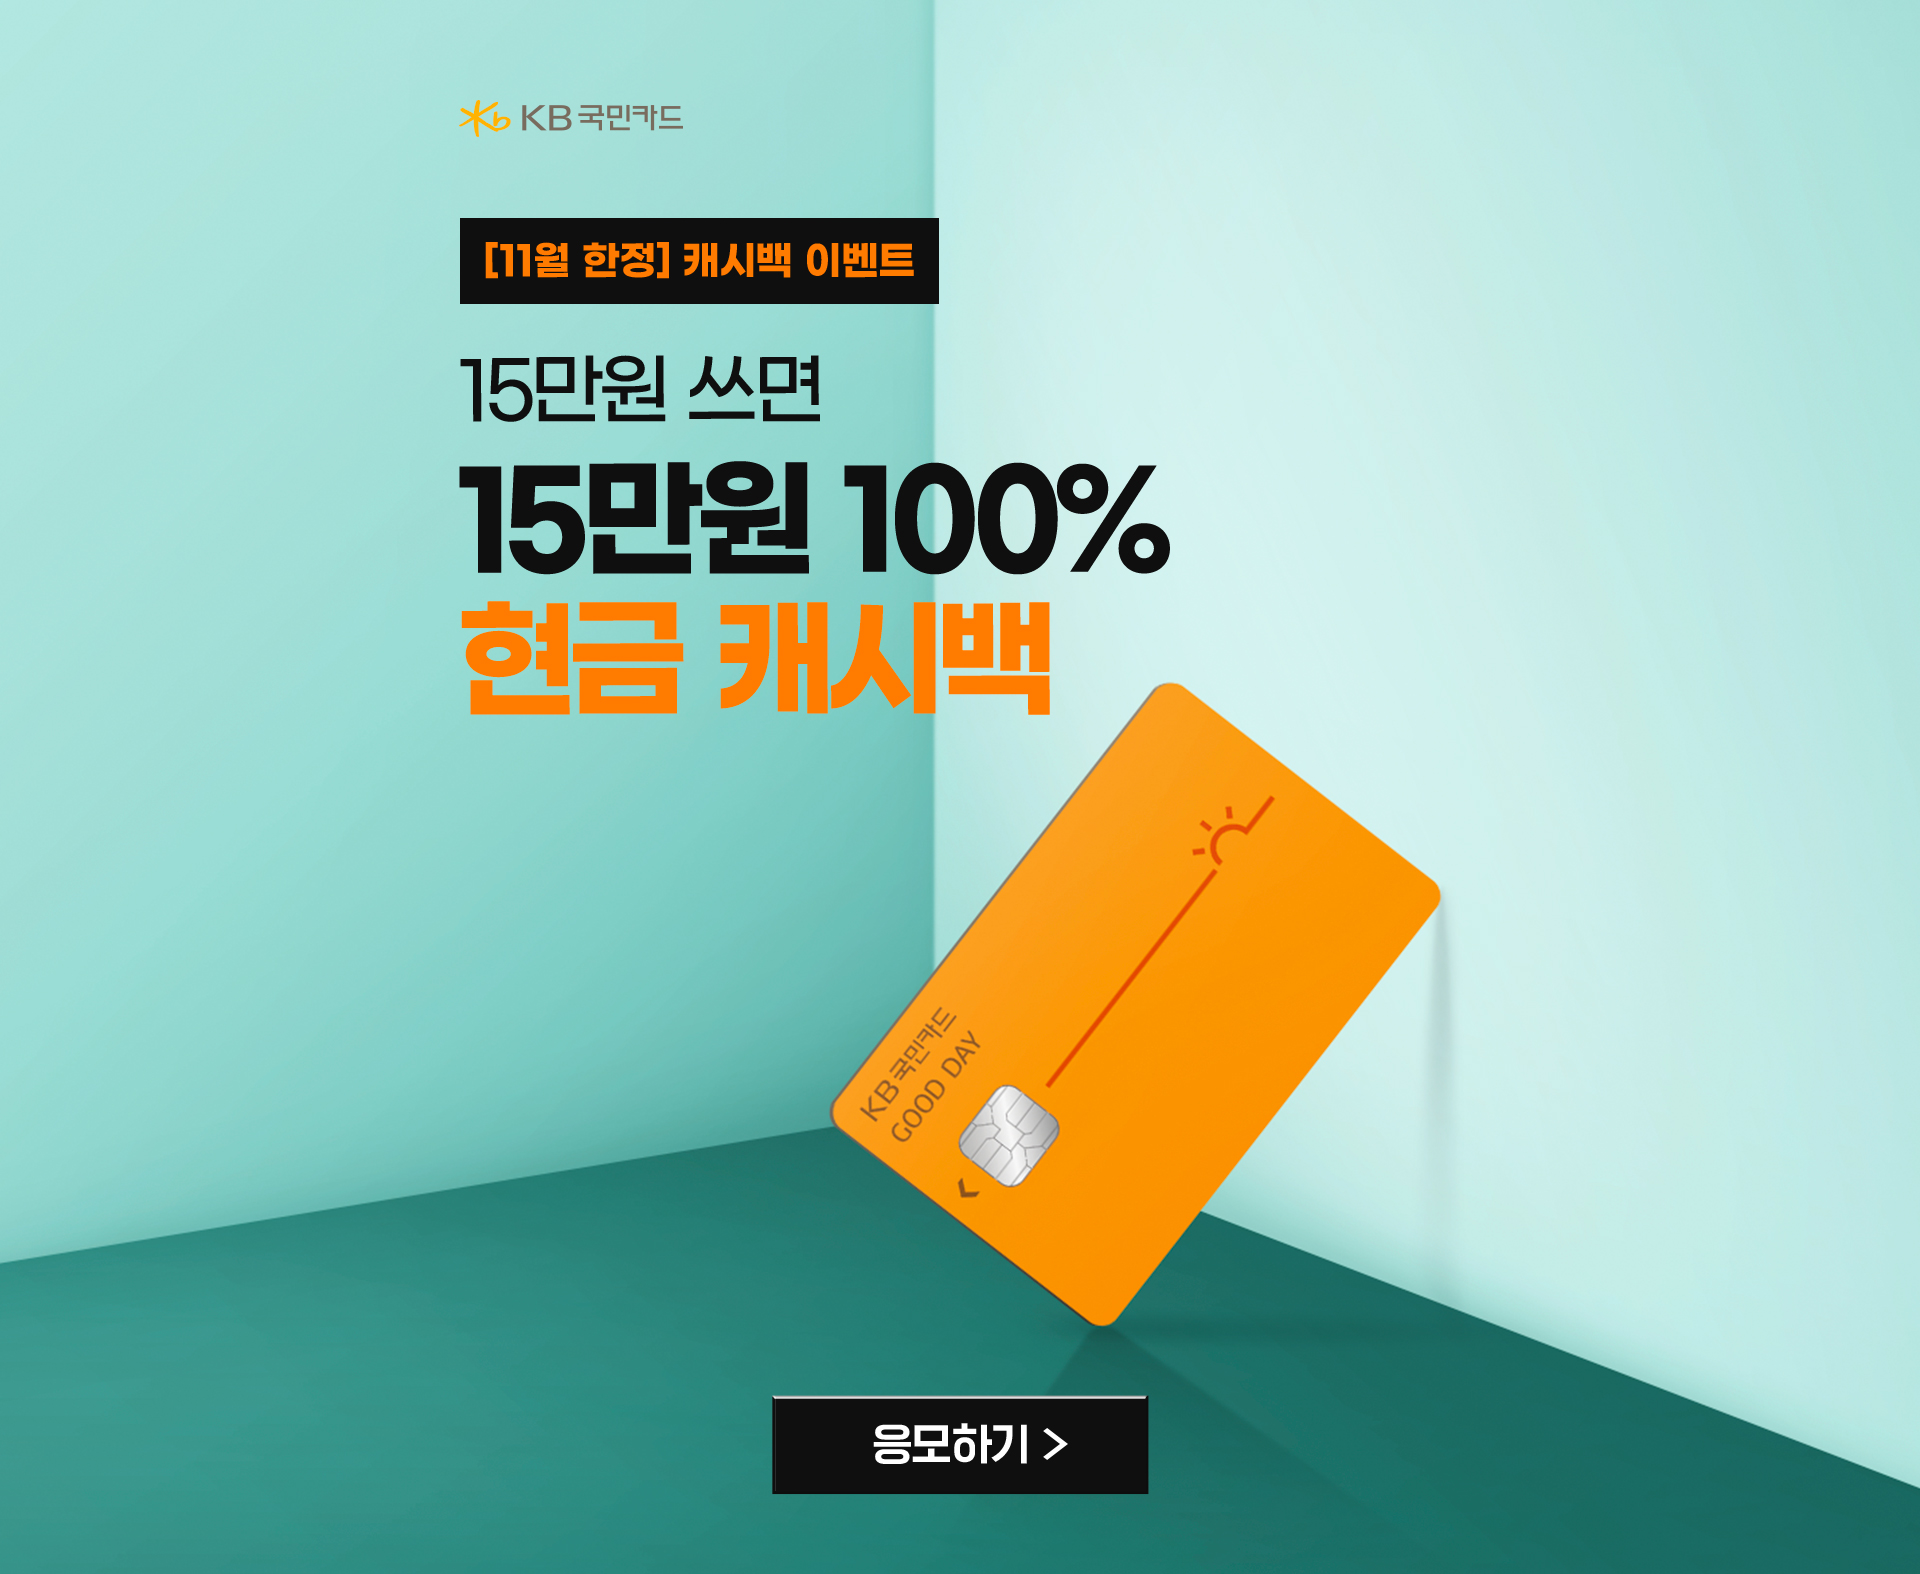 KB국민카드, [11월 한정] 캐시백 이벤트 15만원 쓰면 15만원 100% 현금 캐시백